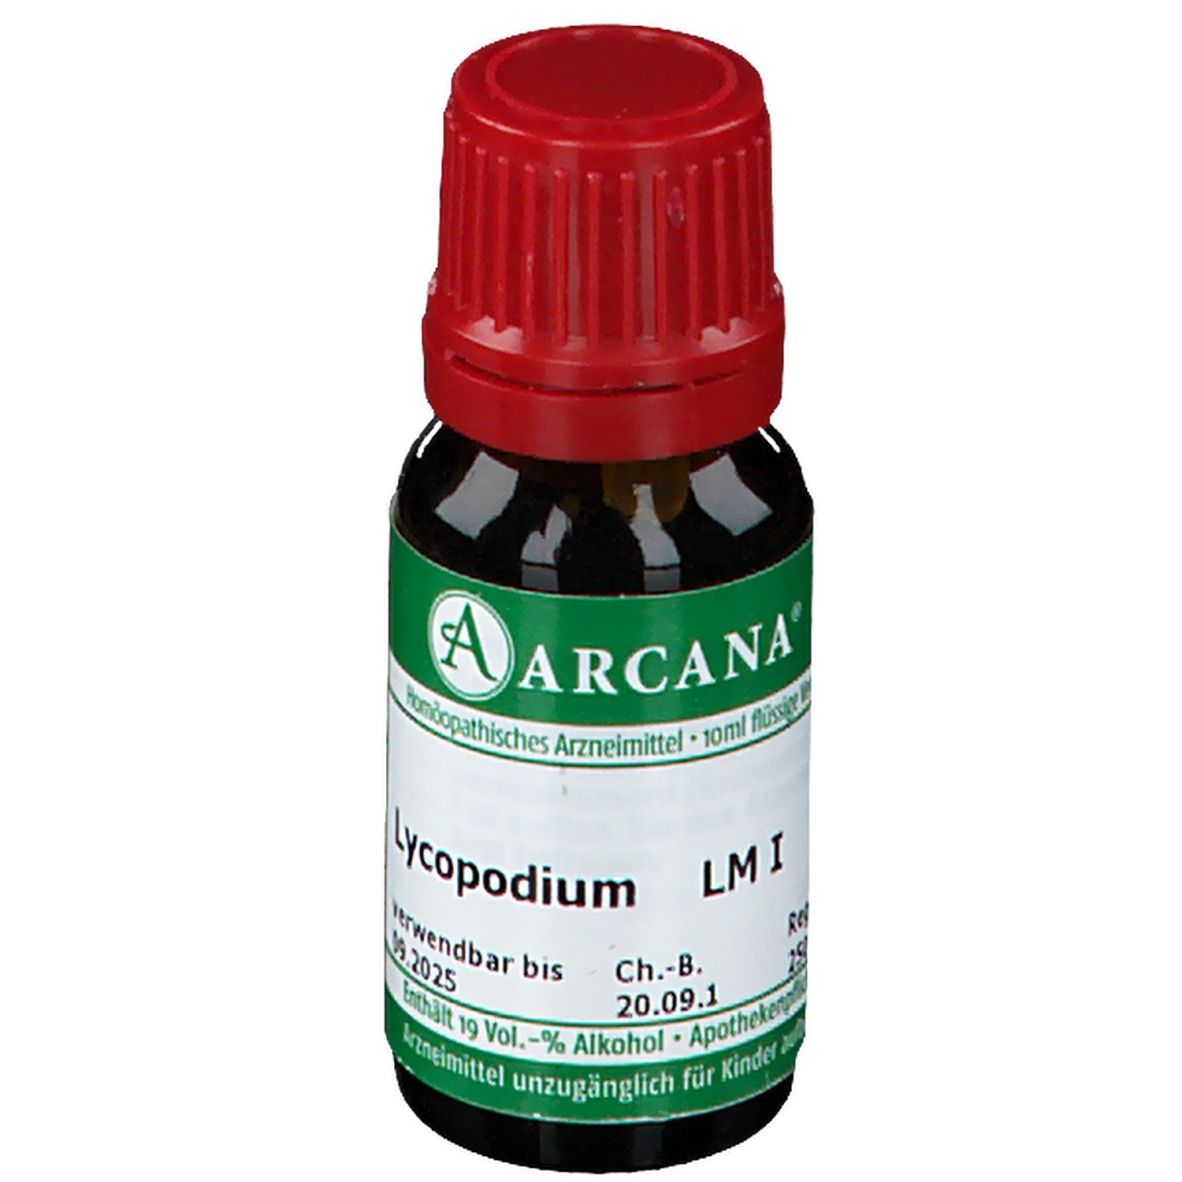 Arcana® Lycopodium LM 1